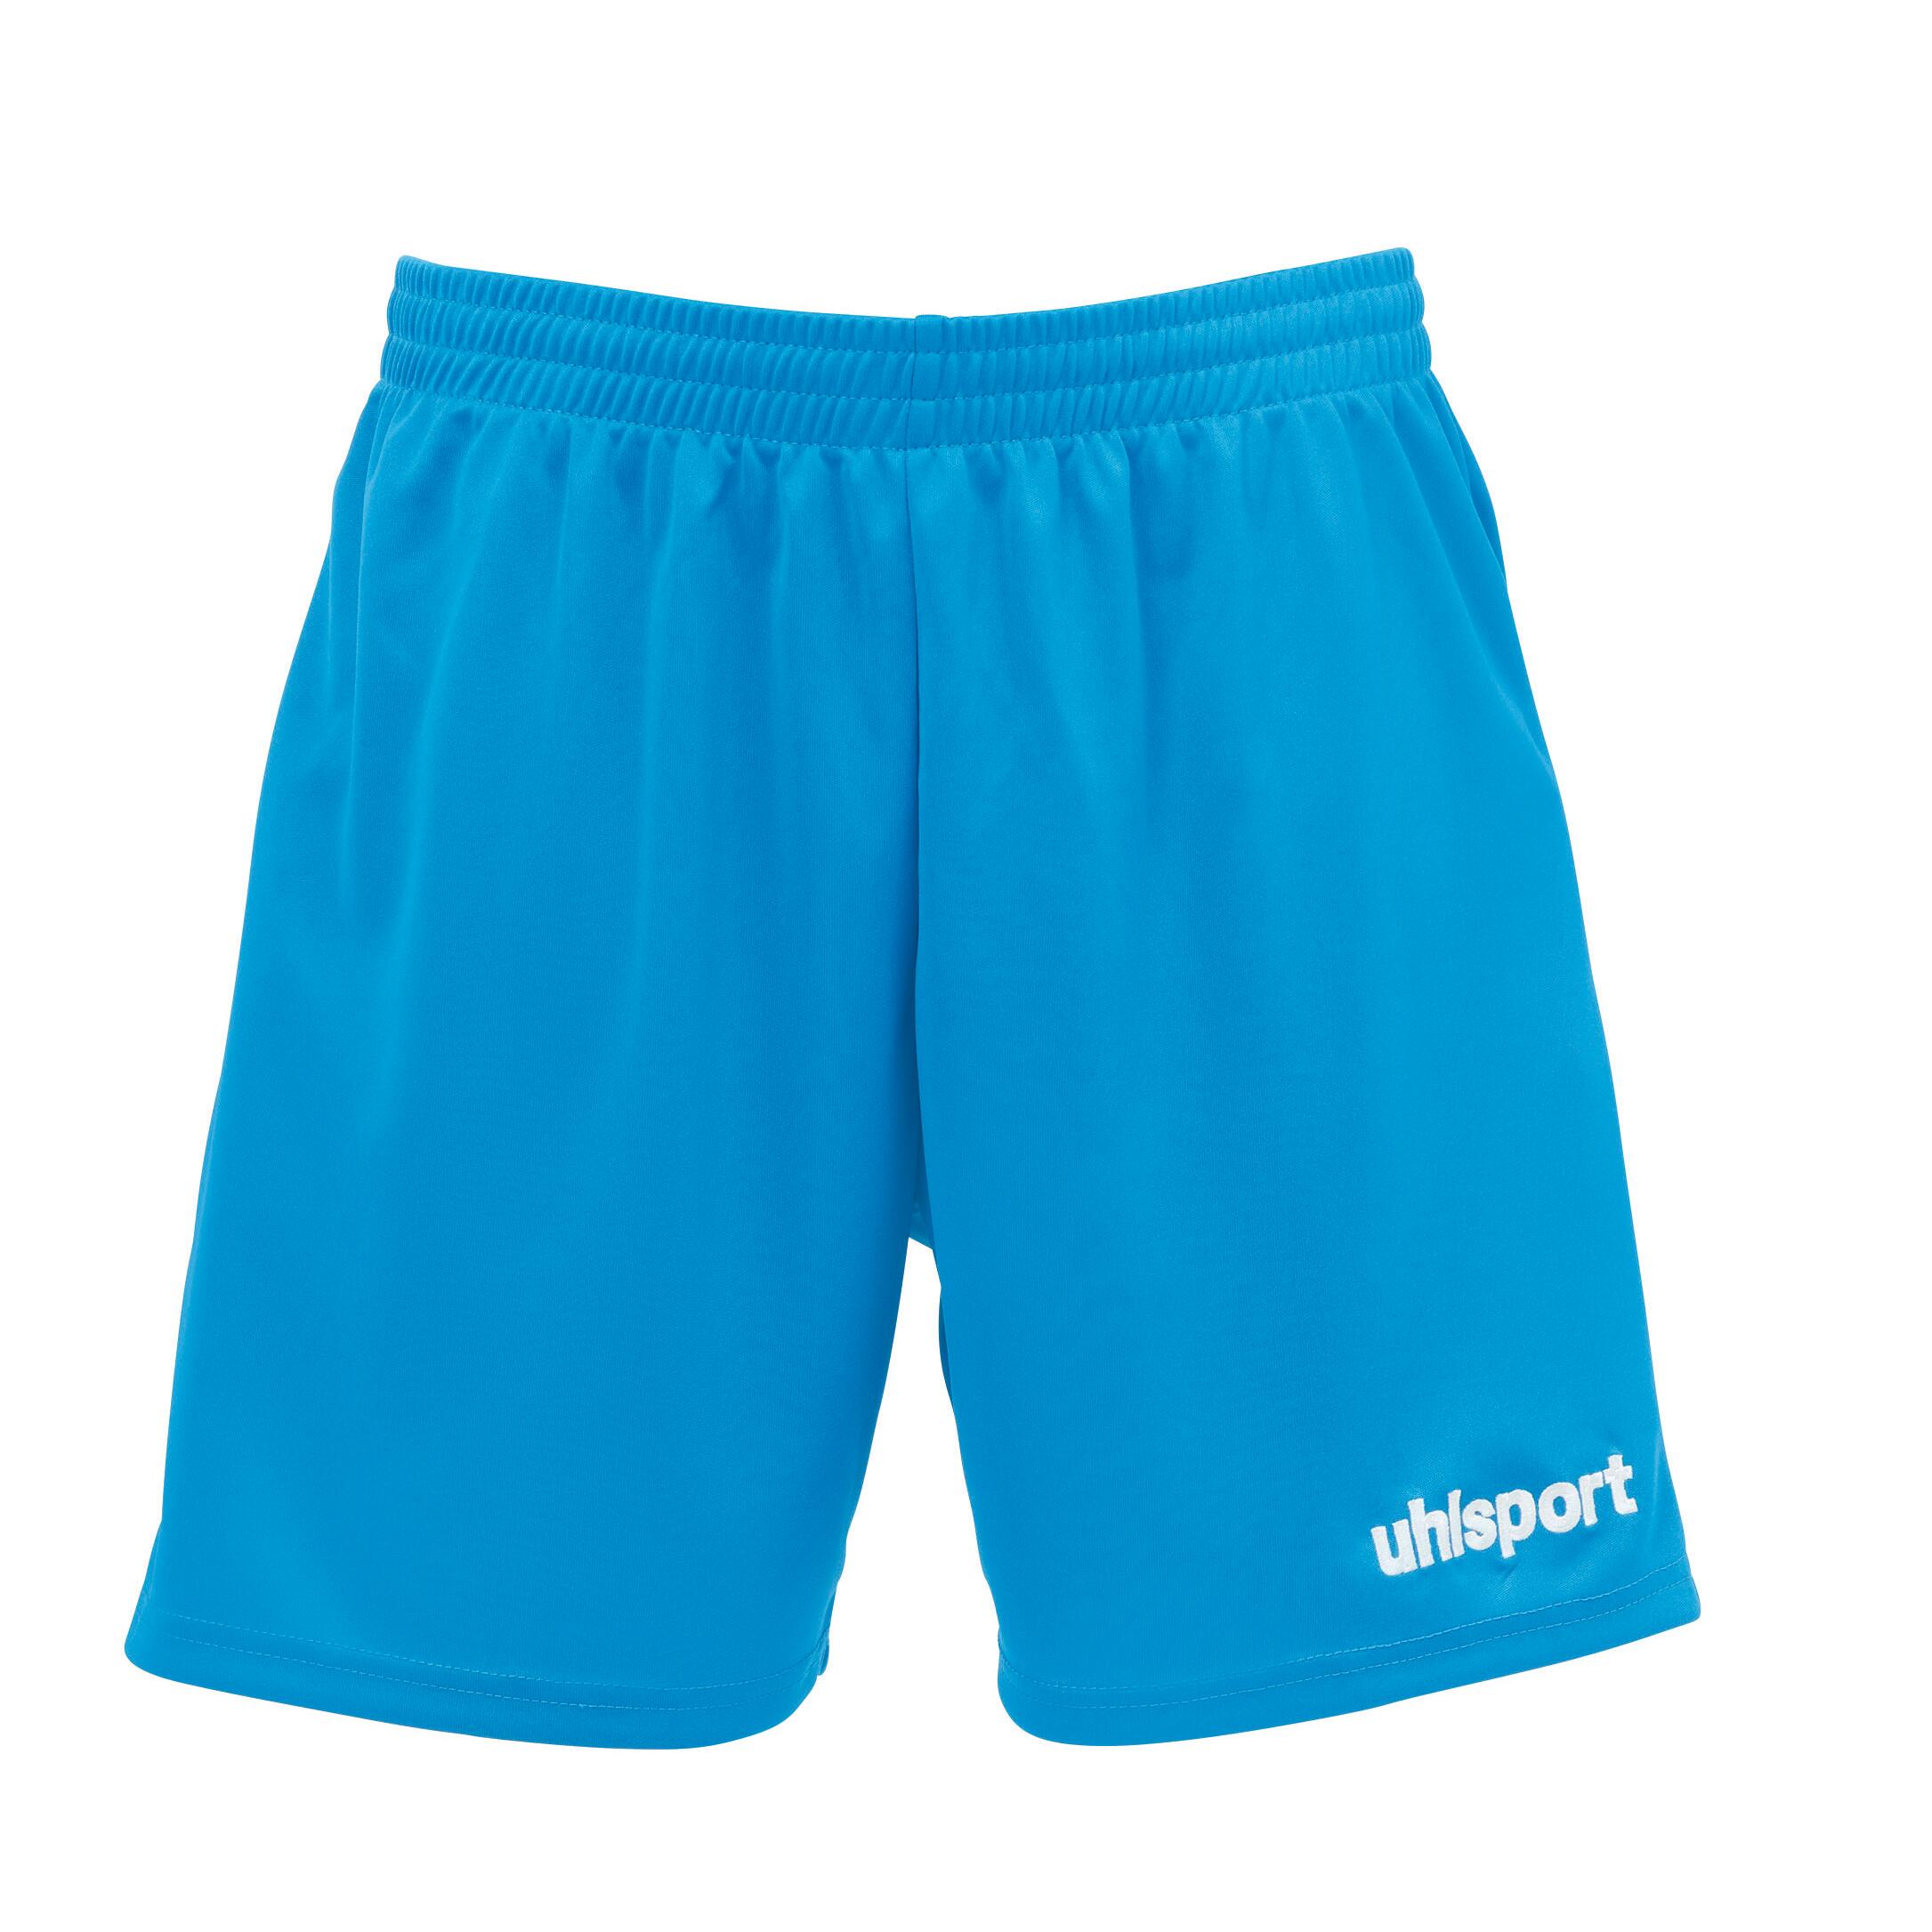 uhlsport Center Basic Shorts de Equipaciones Mujer